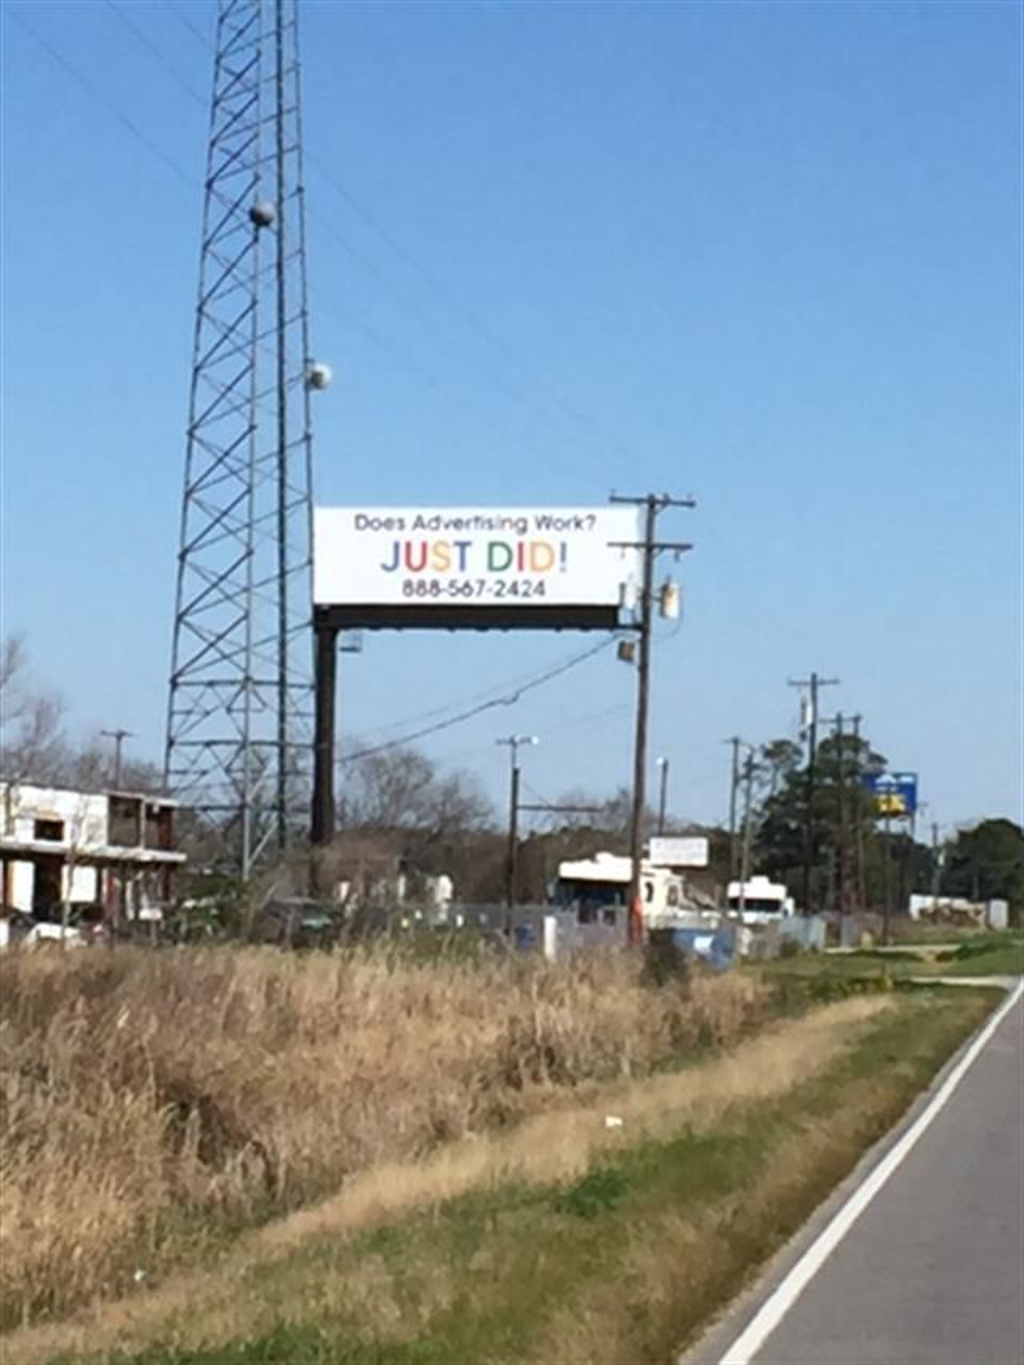 Photo of a billboard in Midland